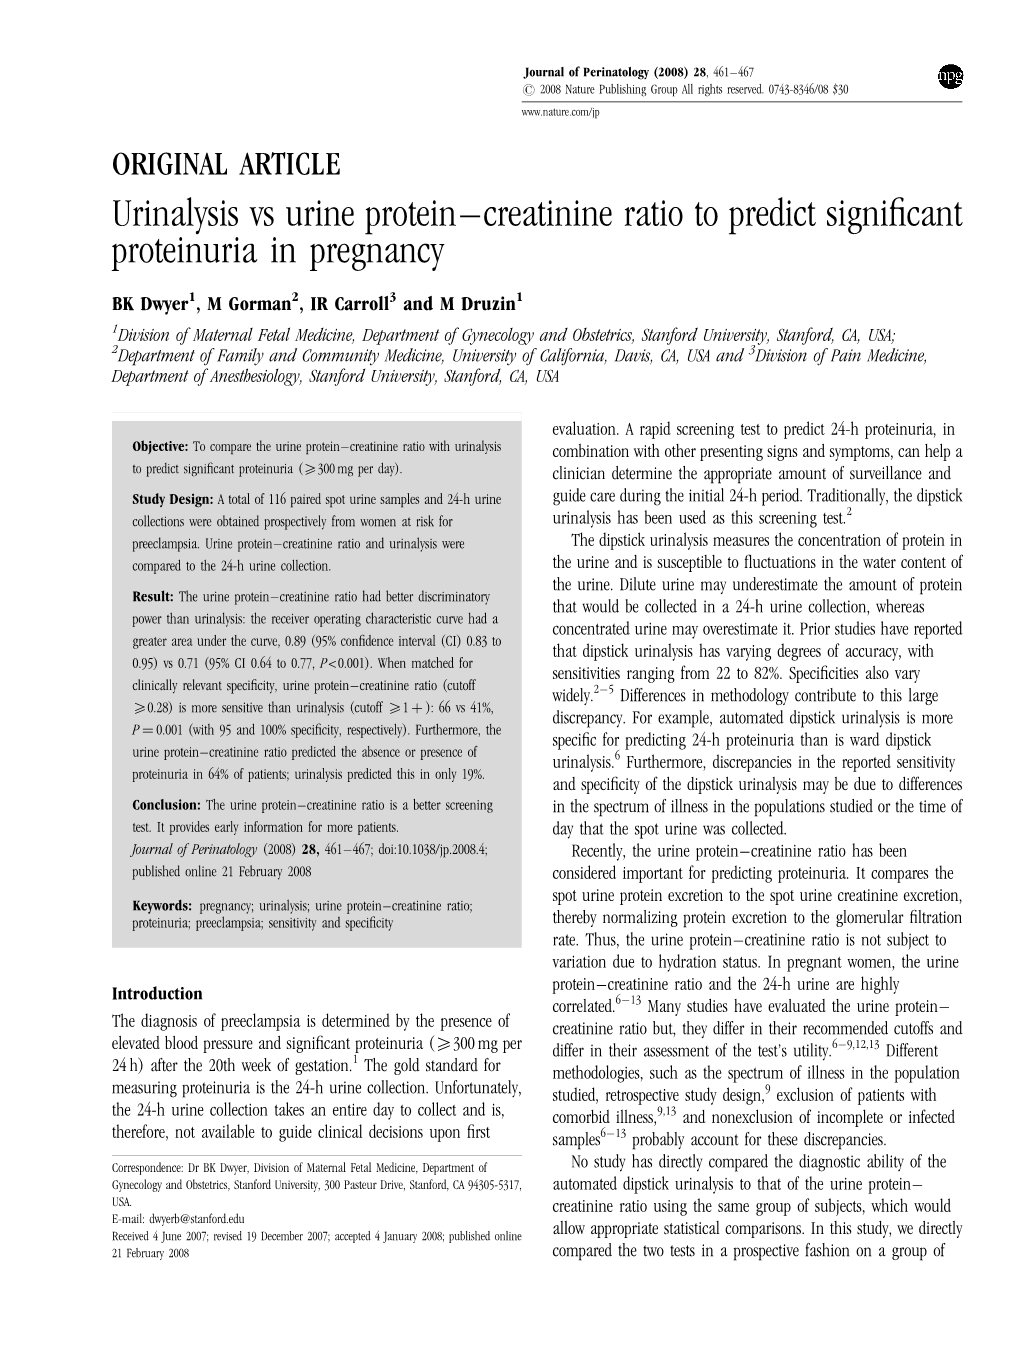 Urinalysis Vs Urine Protein–Creatinine Ratio to Predict Significant